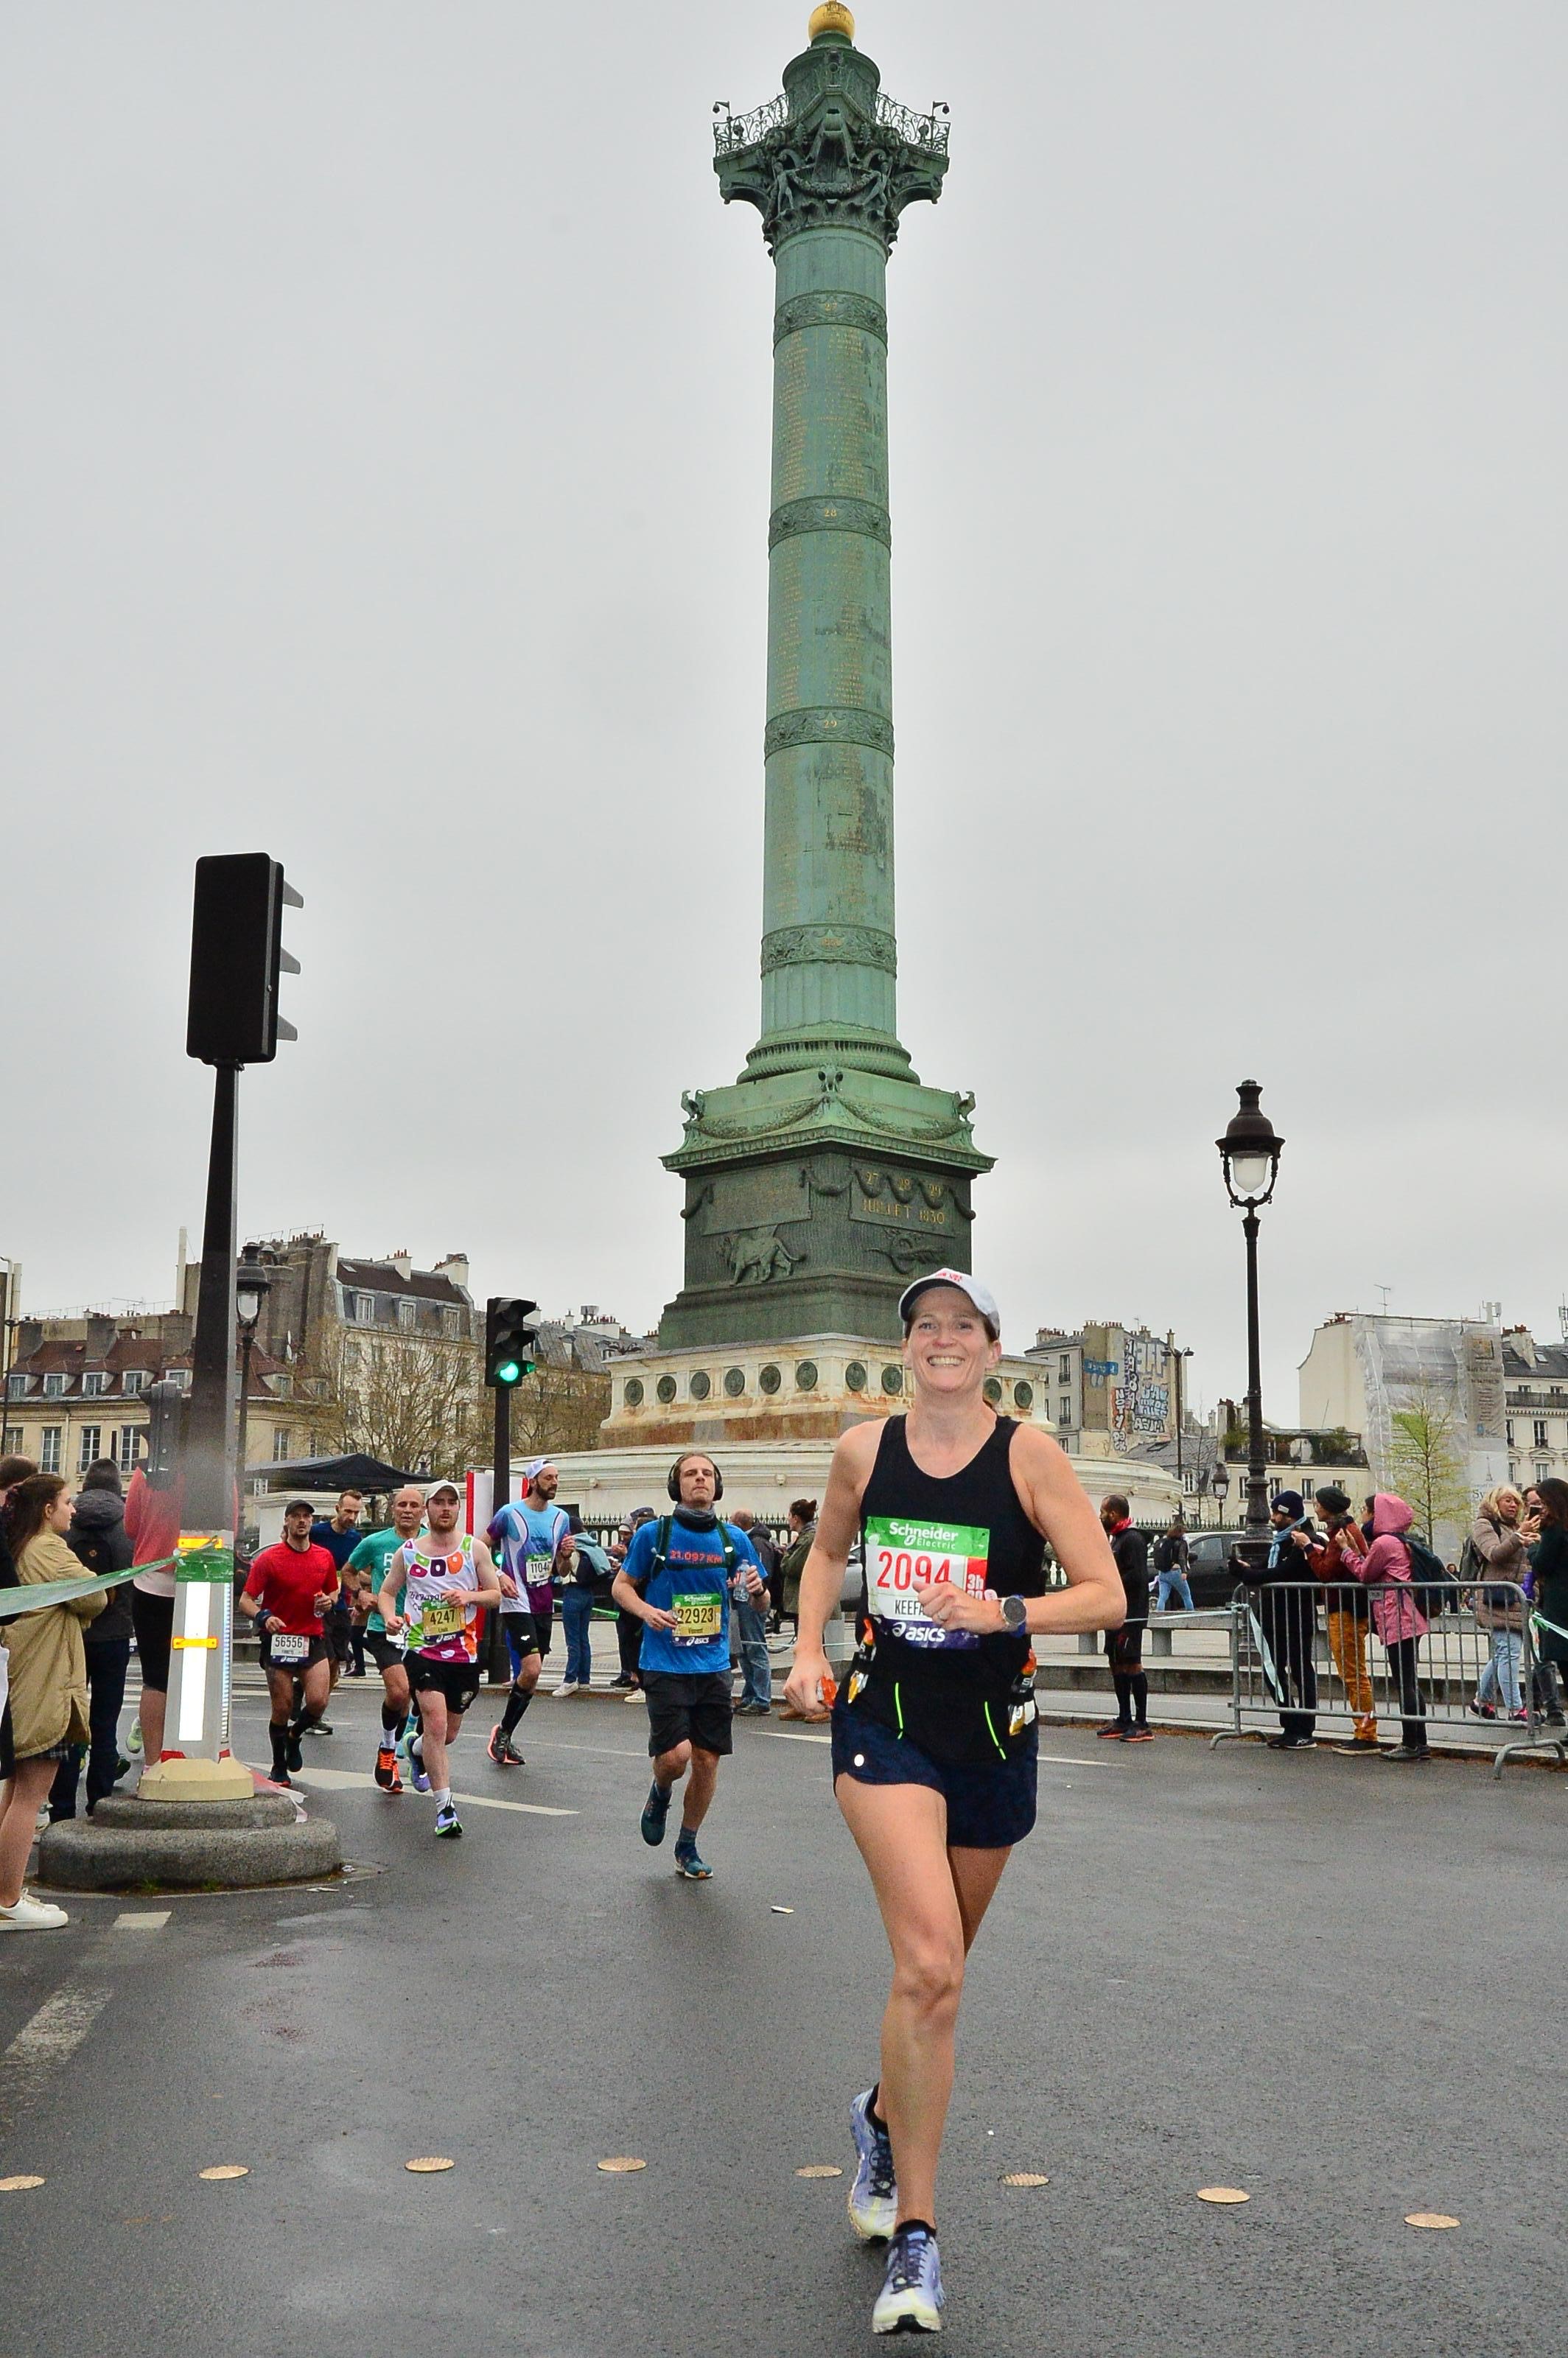 Paris Marathon runners on course